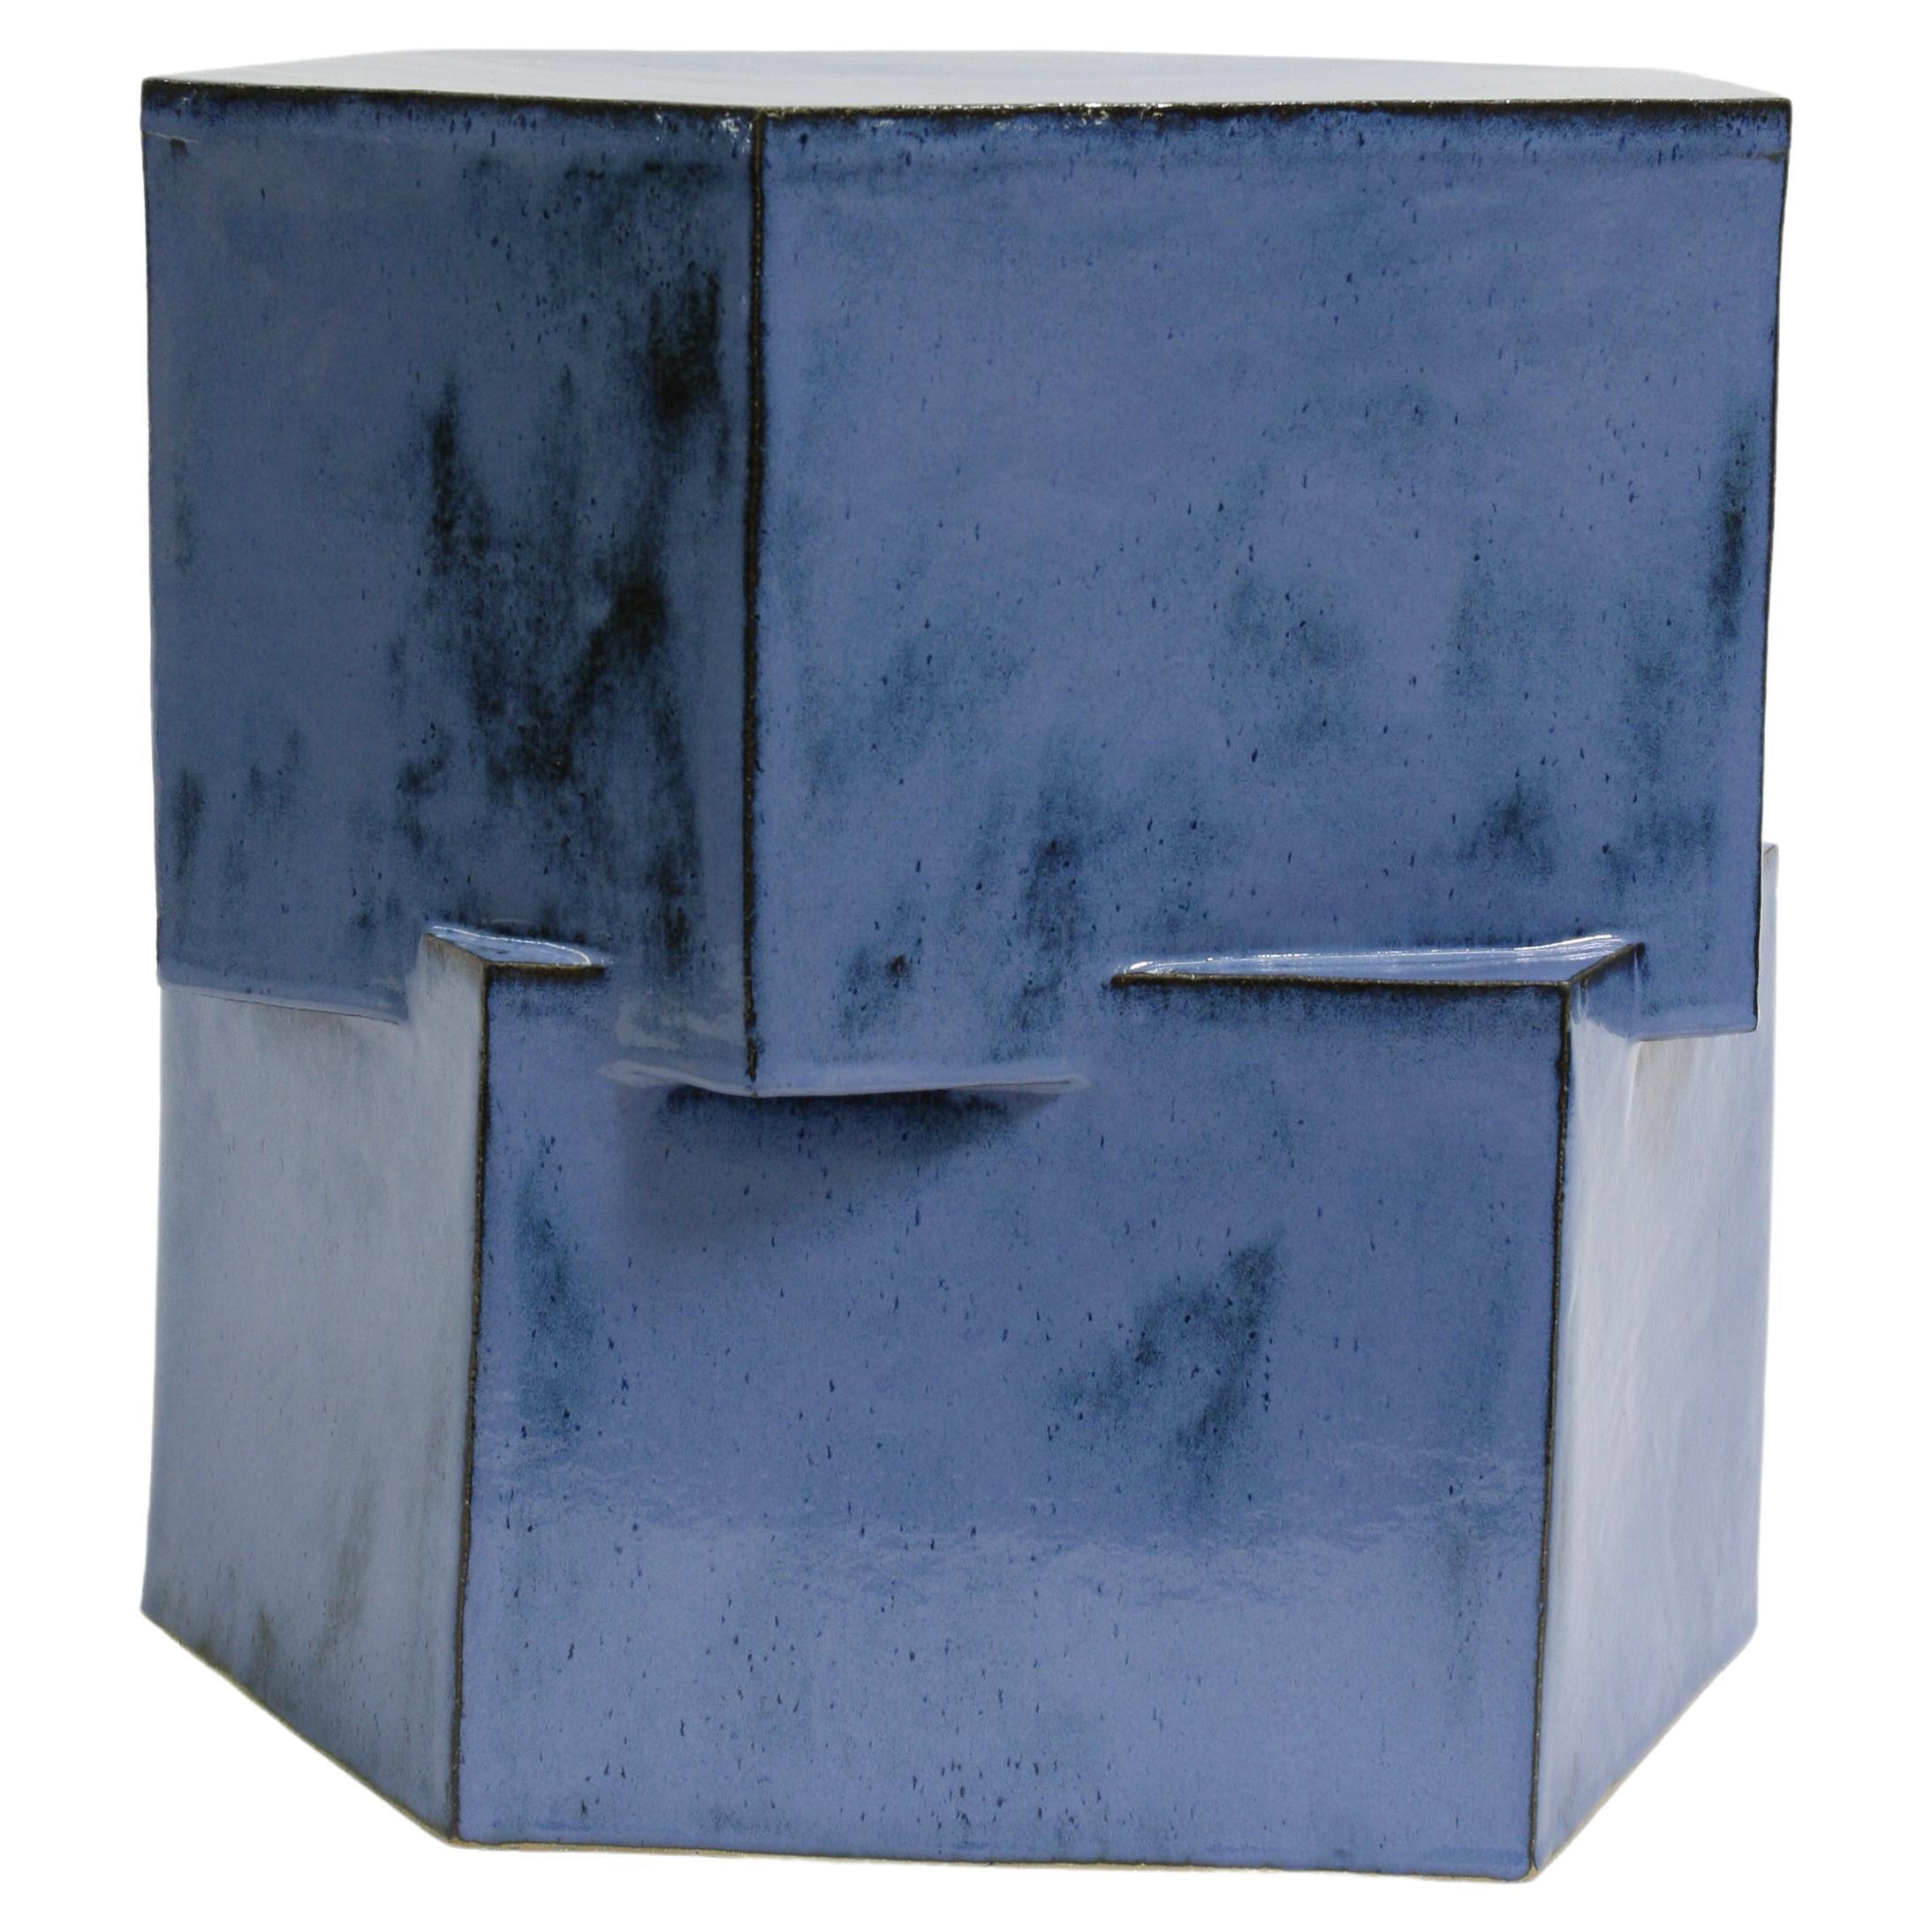 Double Tier Ceramic Hex Side Table in Mottled Blue by Bzippy For Sale